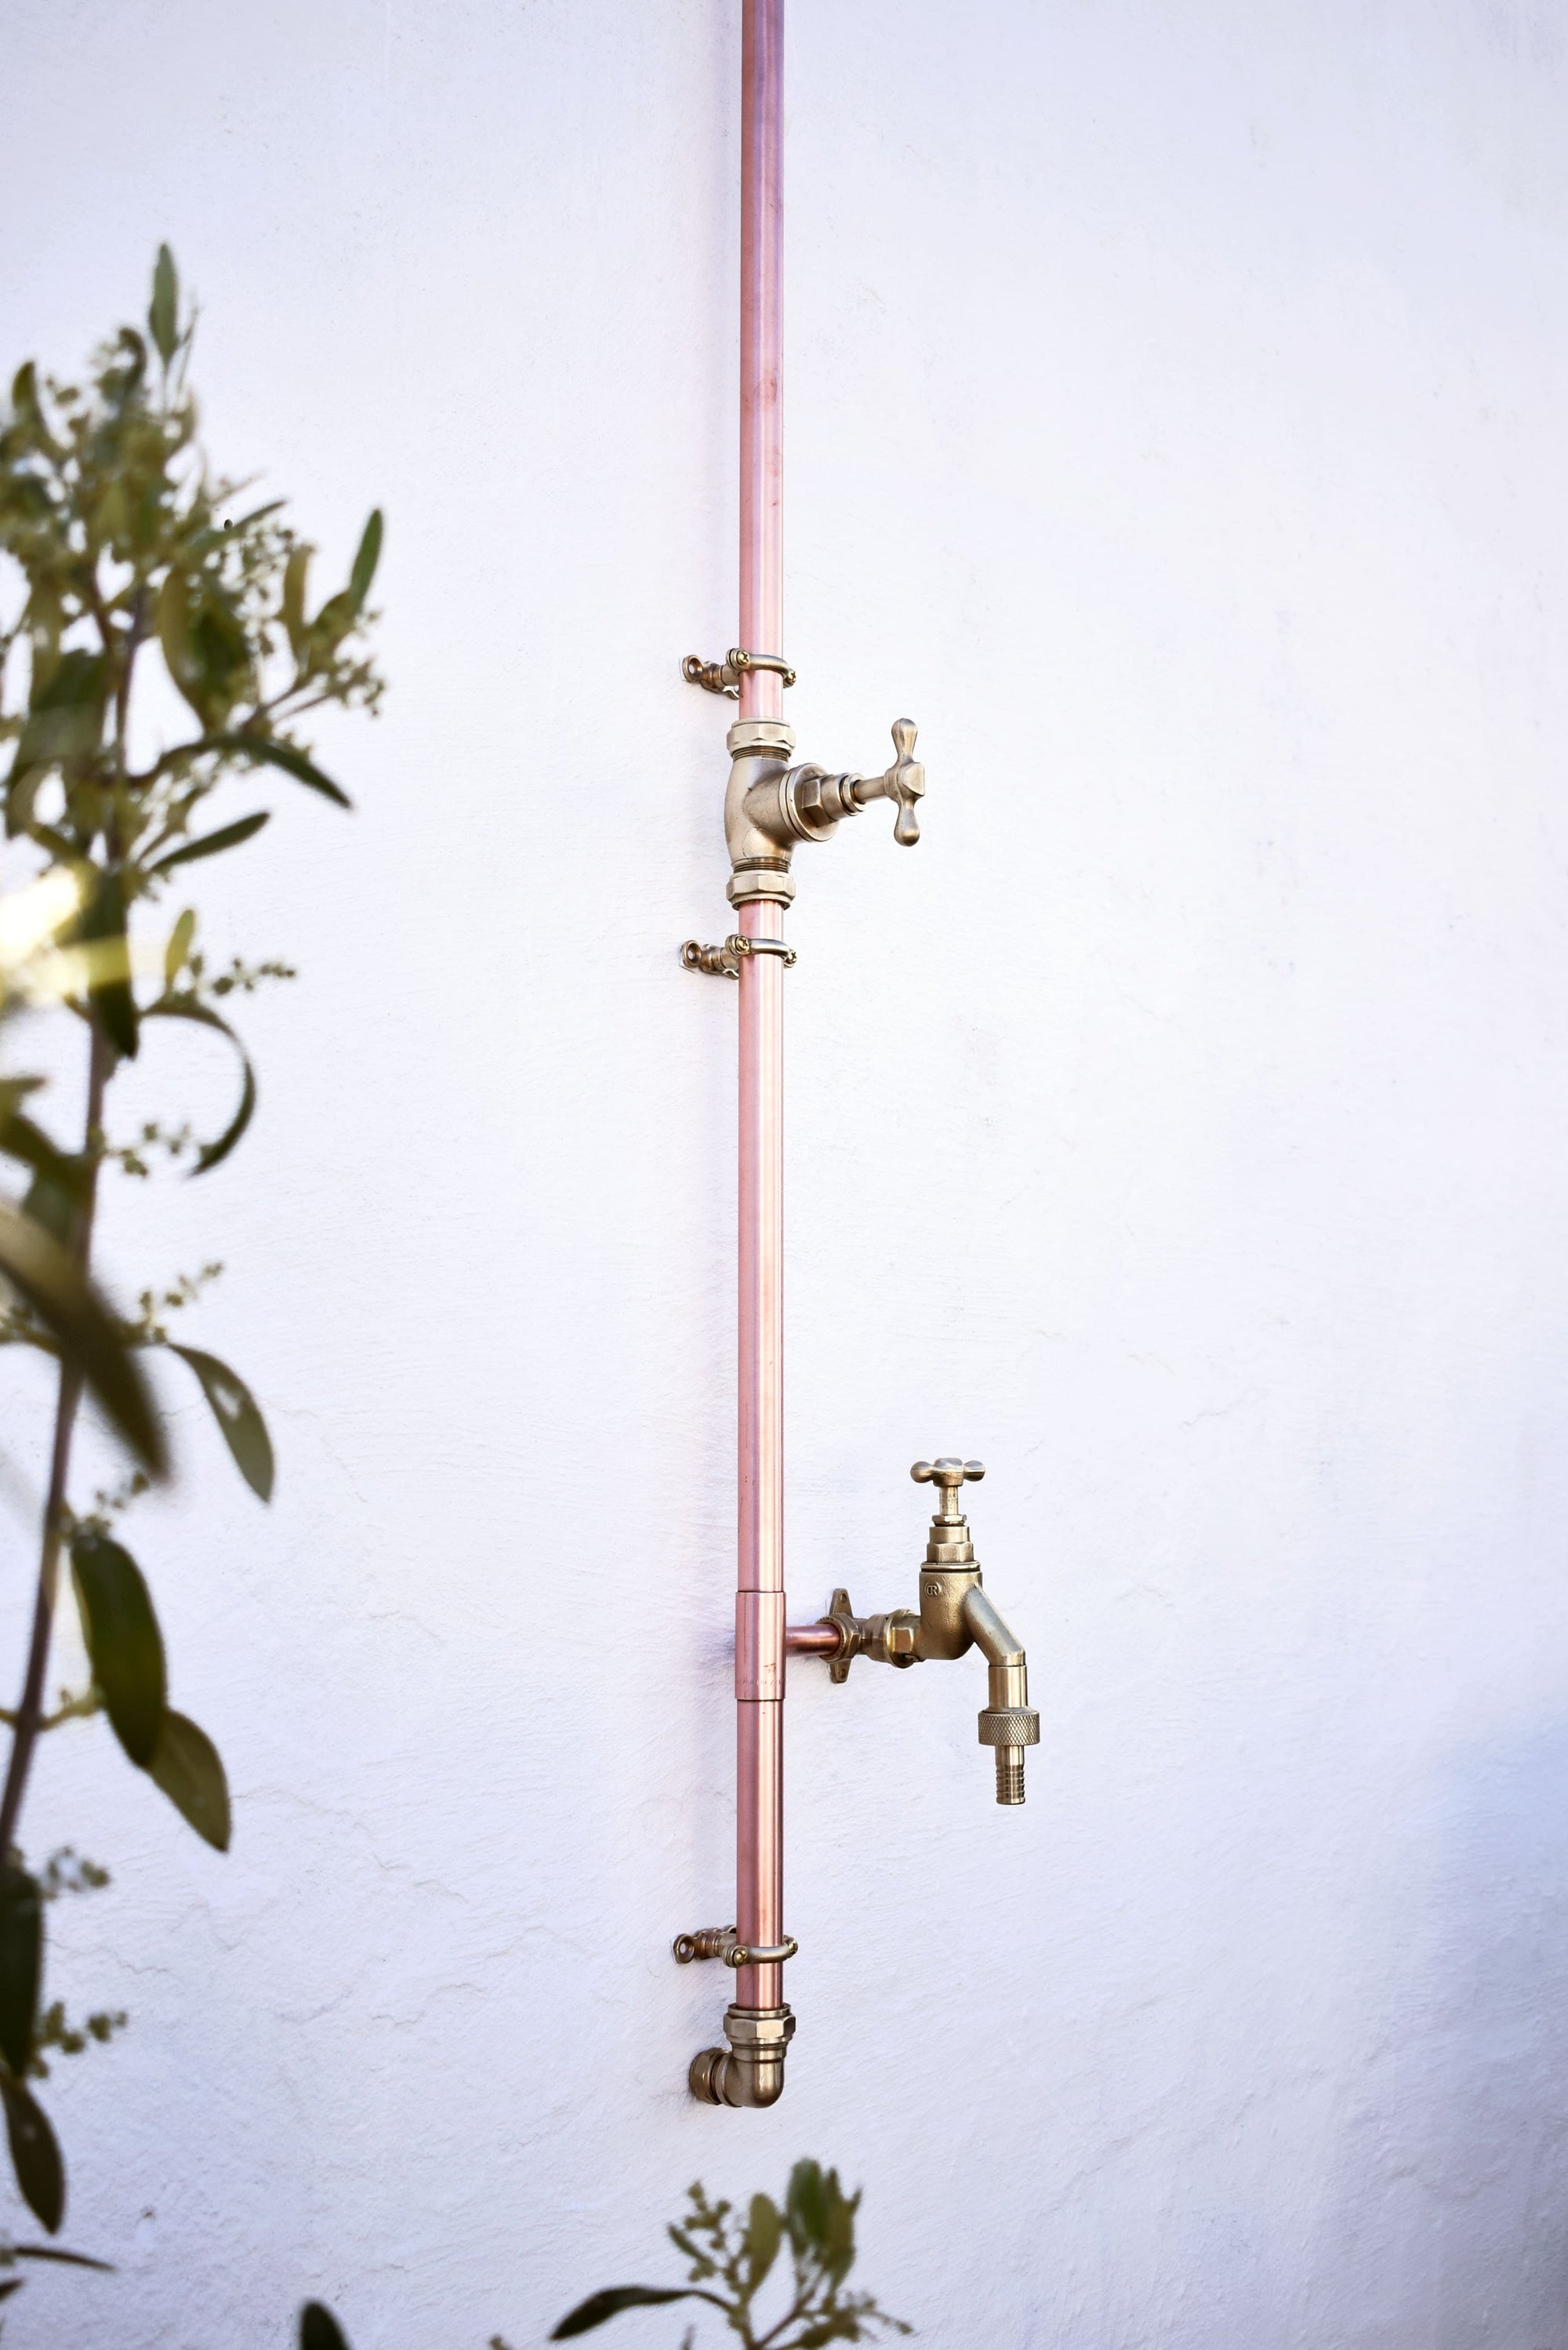 outdoor shower valve copper body and garden tap